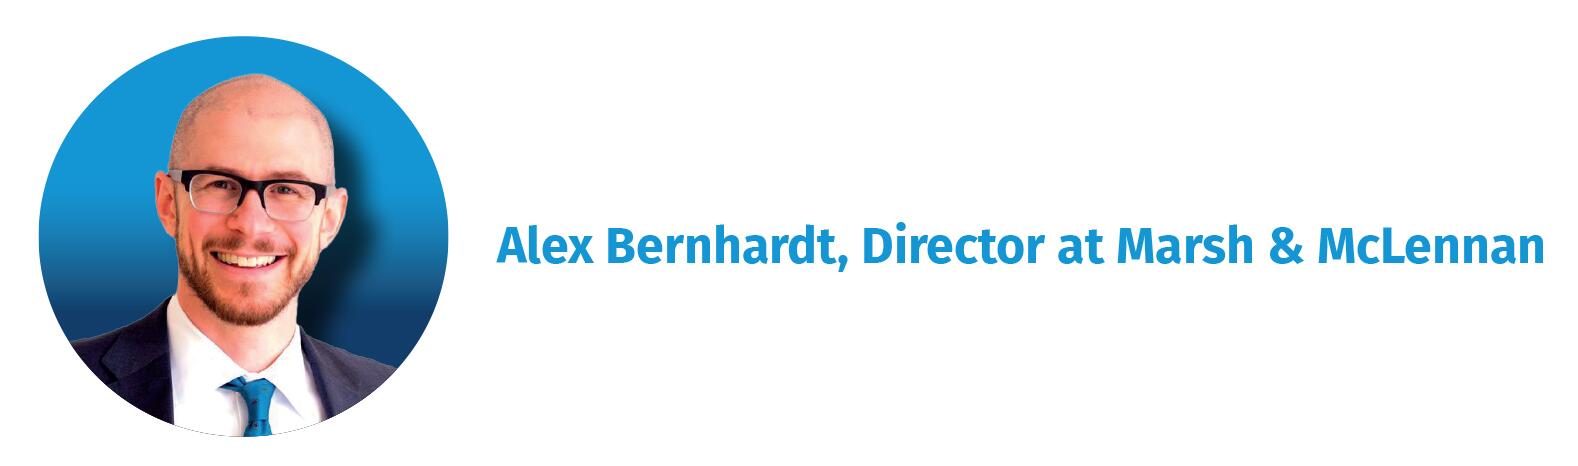 Alex Bernhardt, Director at Marsh & McLennan